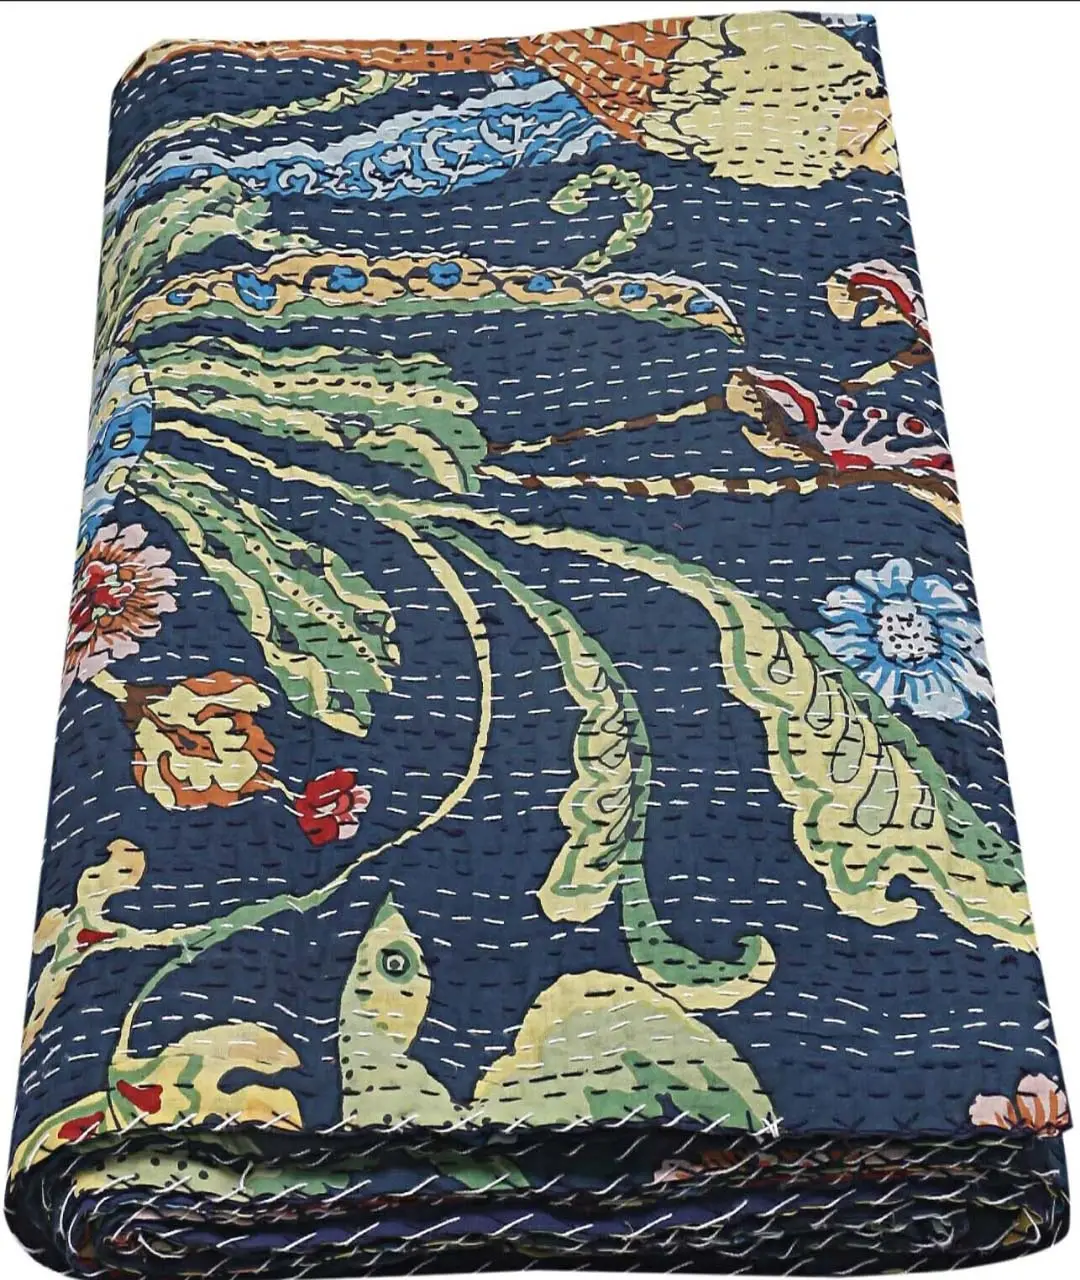 Paradise Patchwork Padded Kantha Quilt Handmade Vintage Quilts Boho King Size Bedding for Her